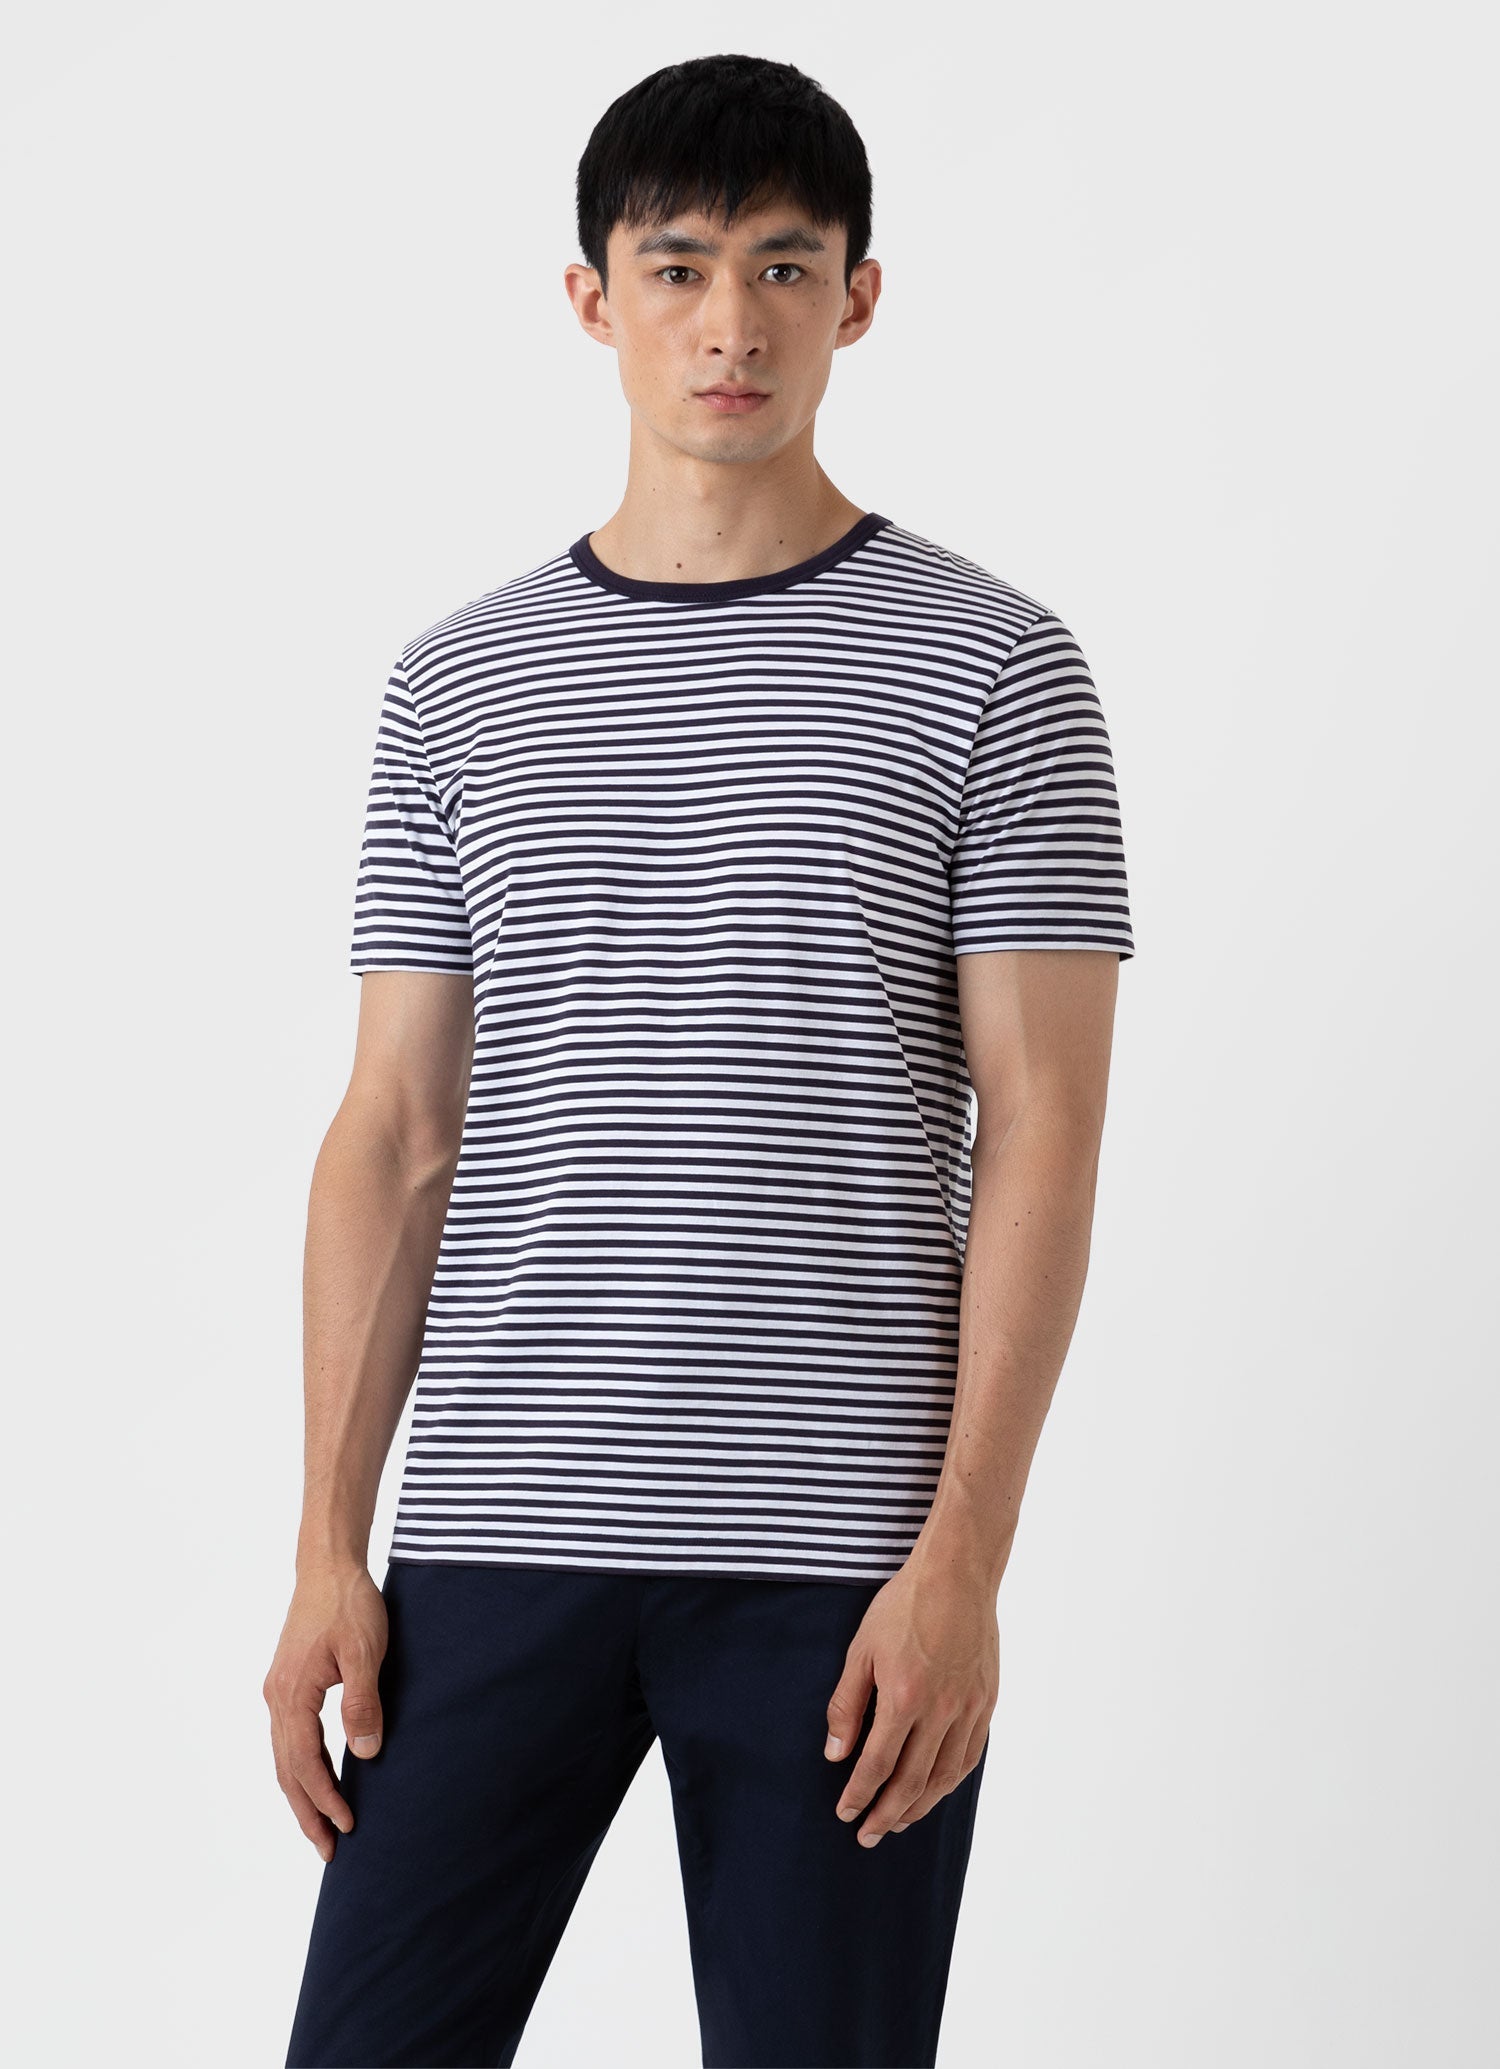 Men's Classic T-shirt in Navy/White English Stripe